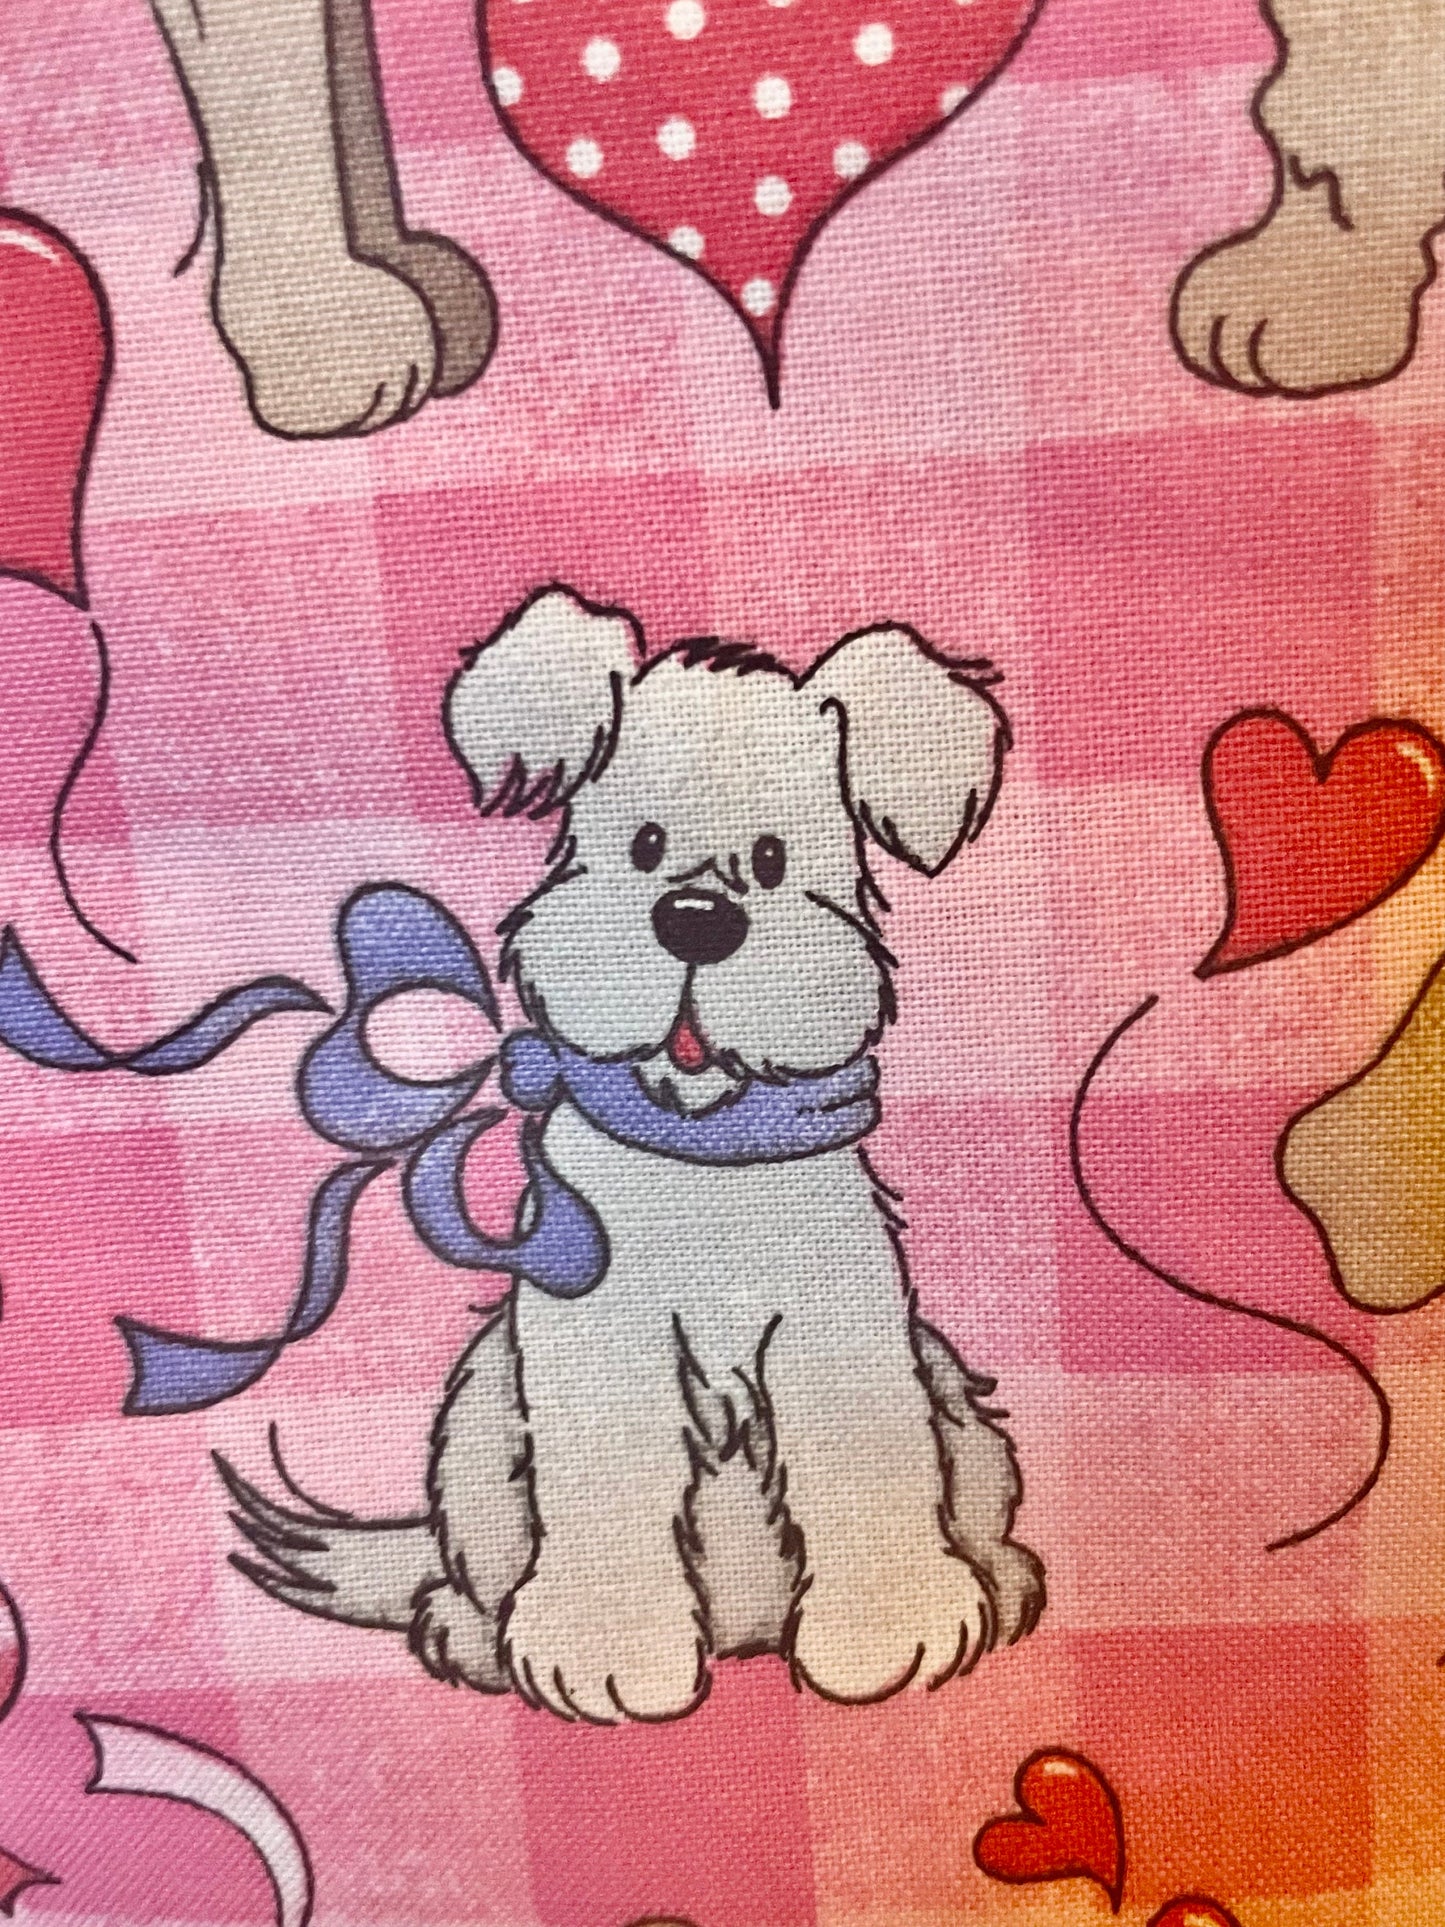 Cutest Valentine’s dog lover reversible blanket ever!